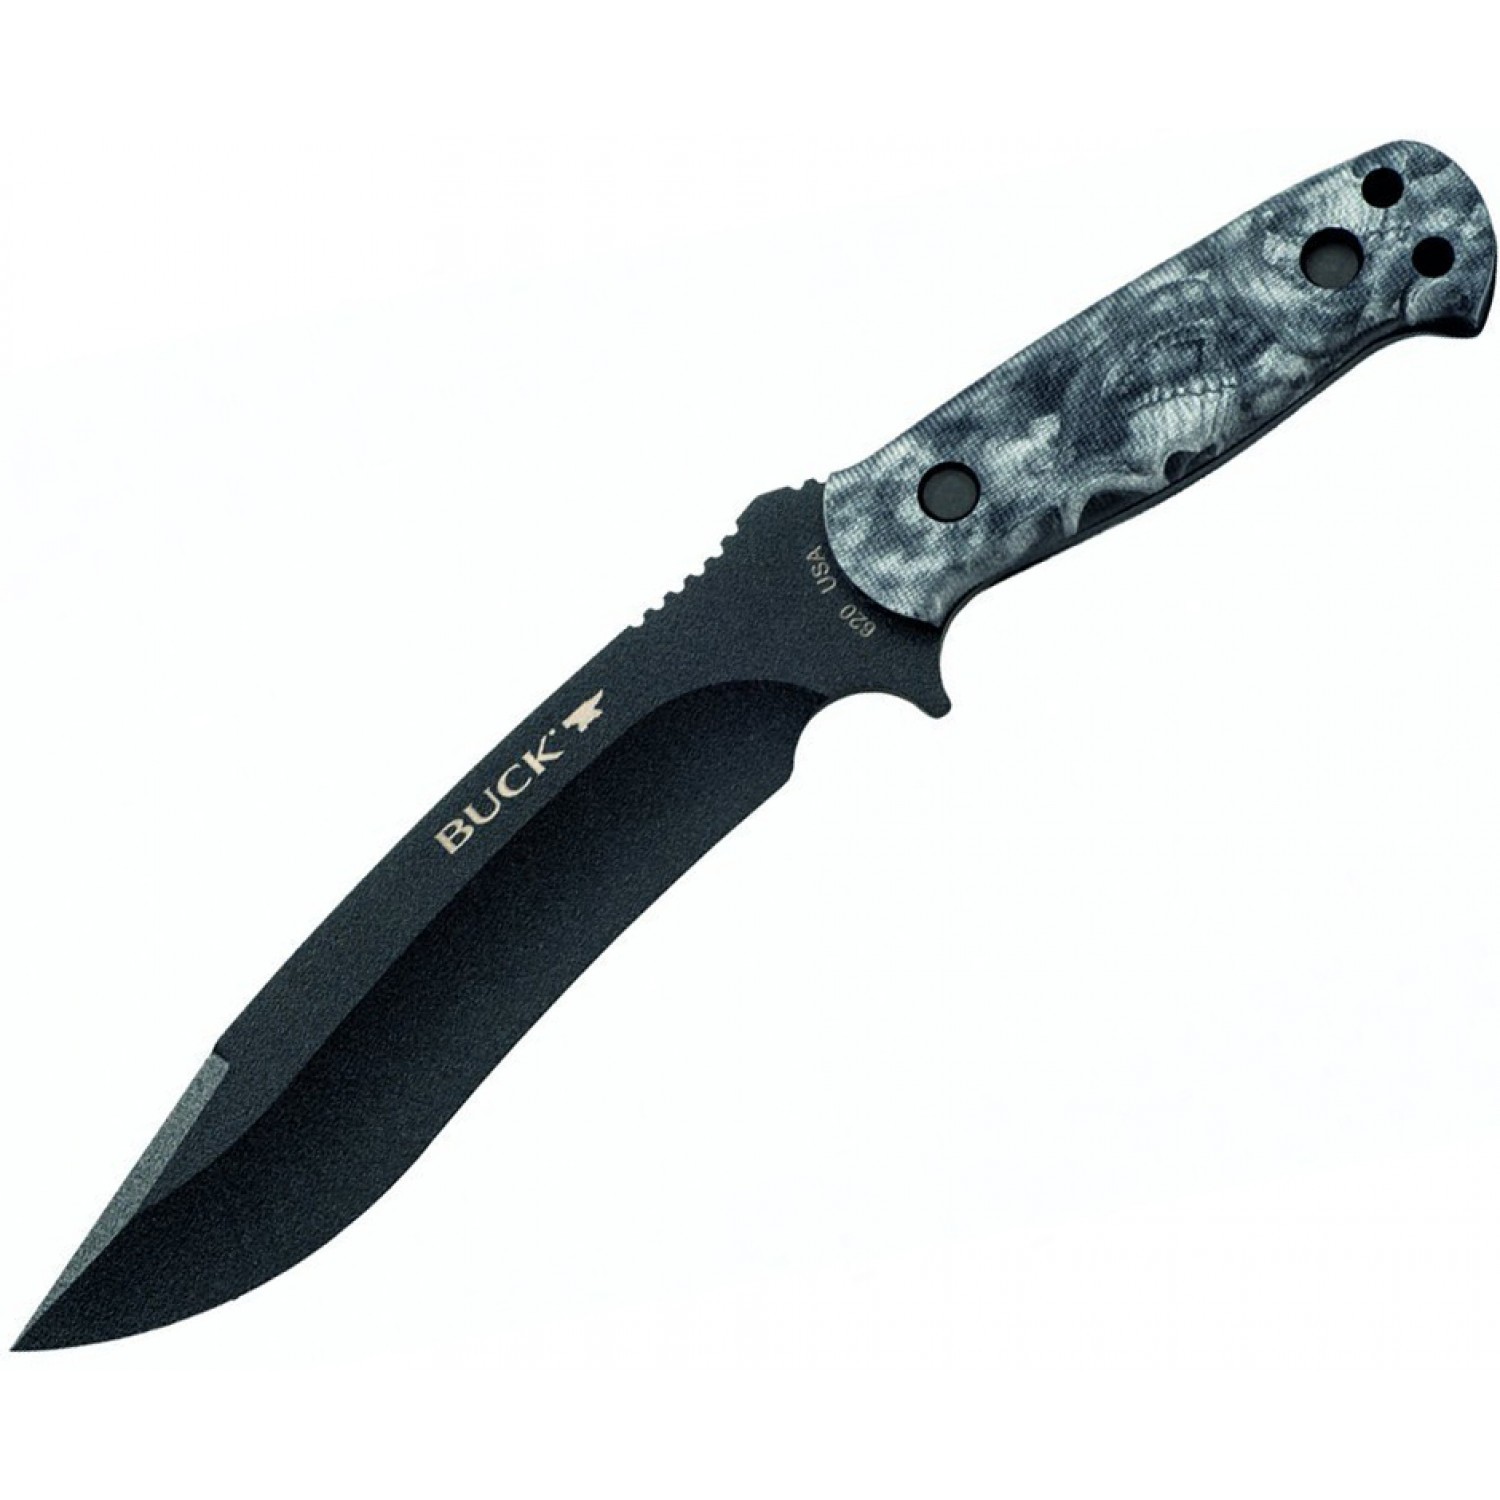 Нож Buck Reaper Black фикс. клинок 17 см сталь 420HC - фото 1